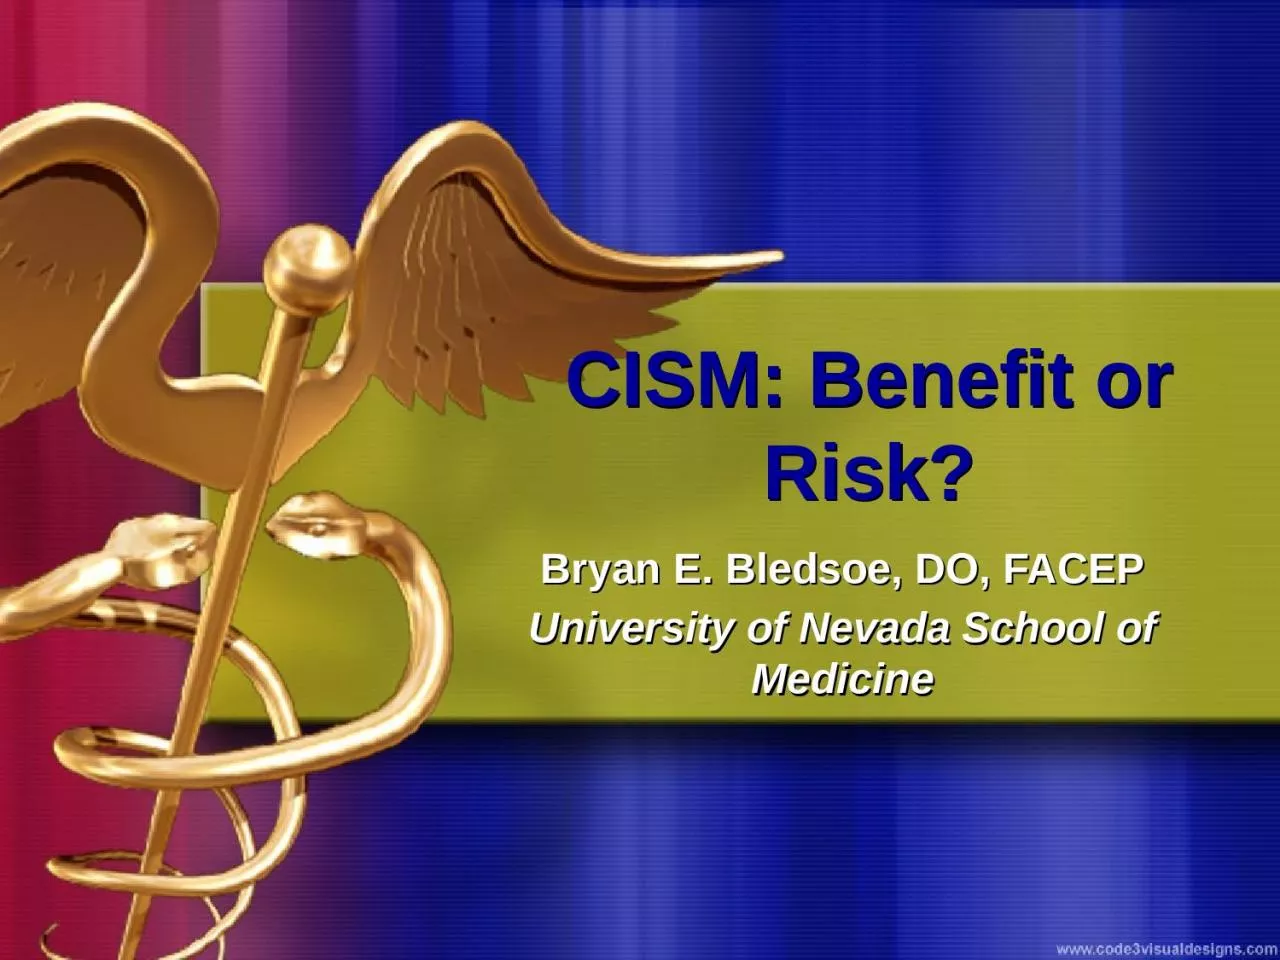 CISM: Benefit or Risk? Bryan E. Bledsoe, DO, FACEP